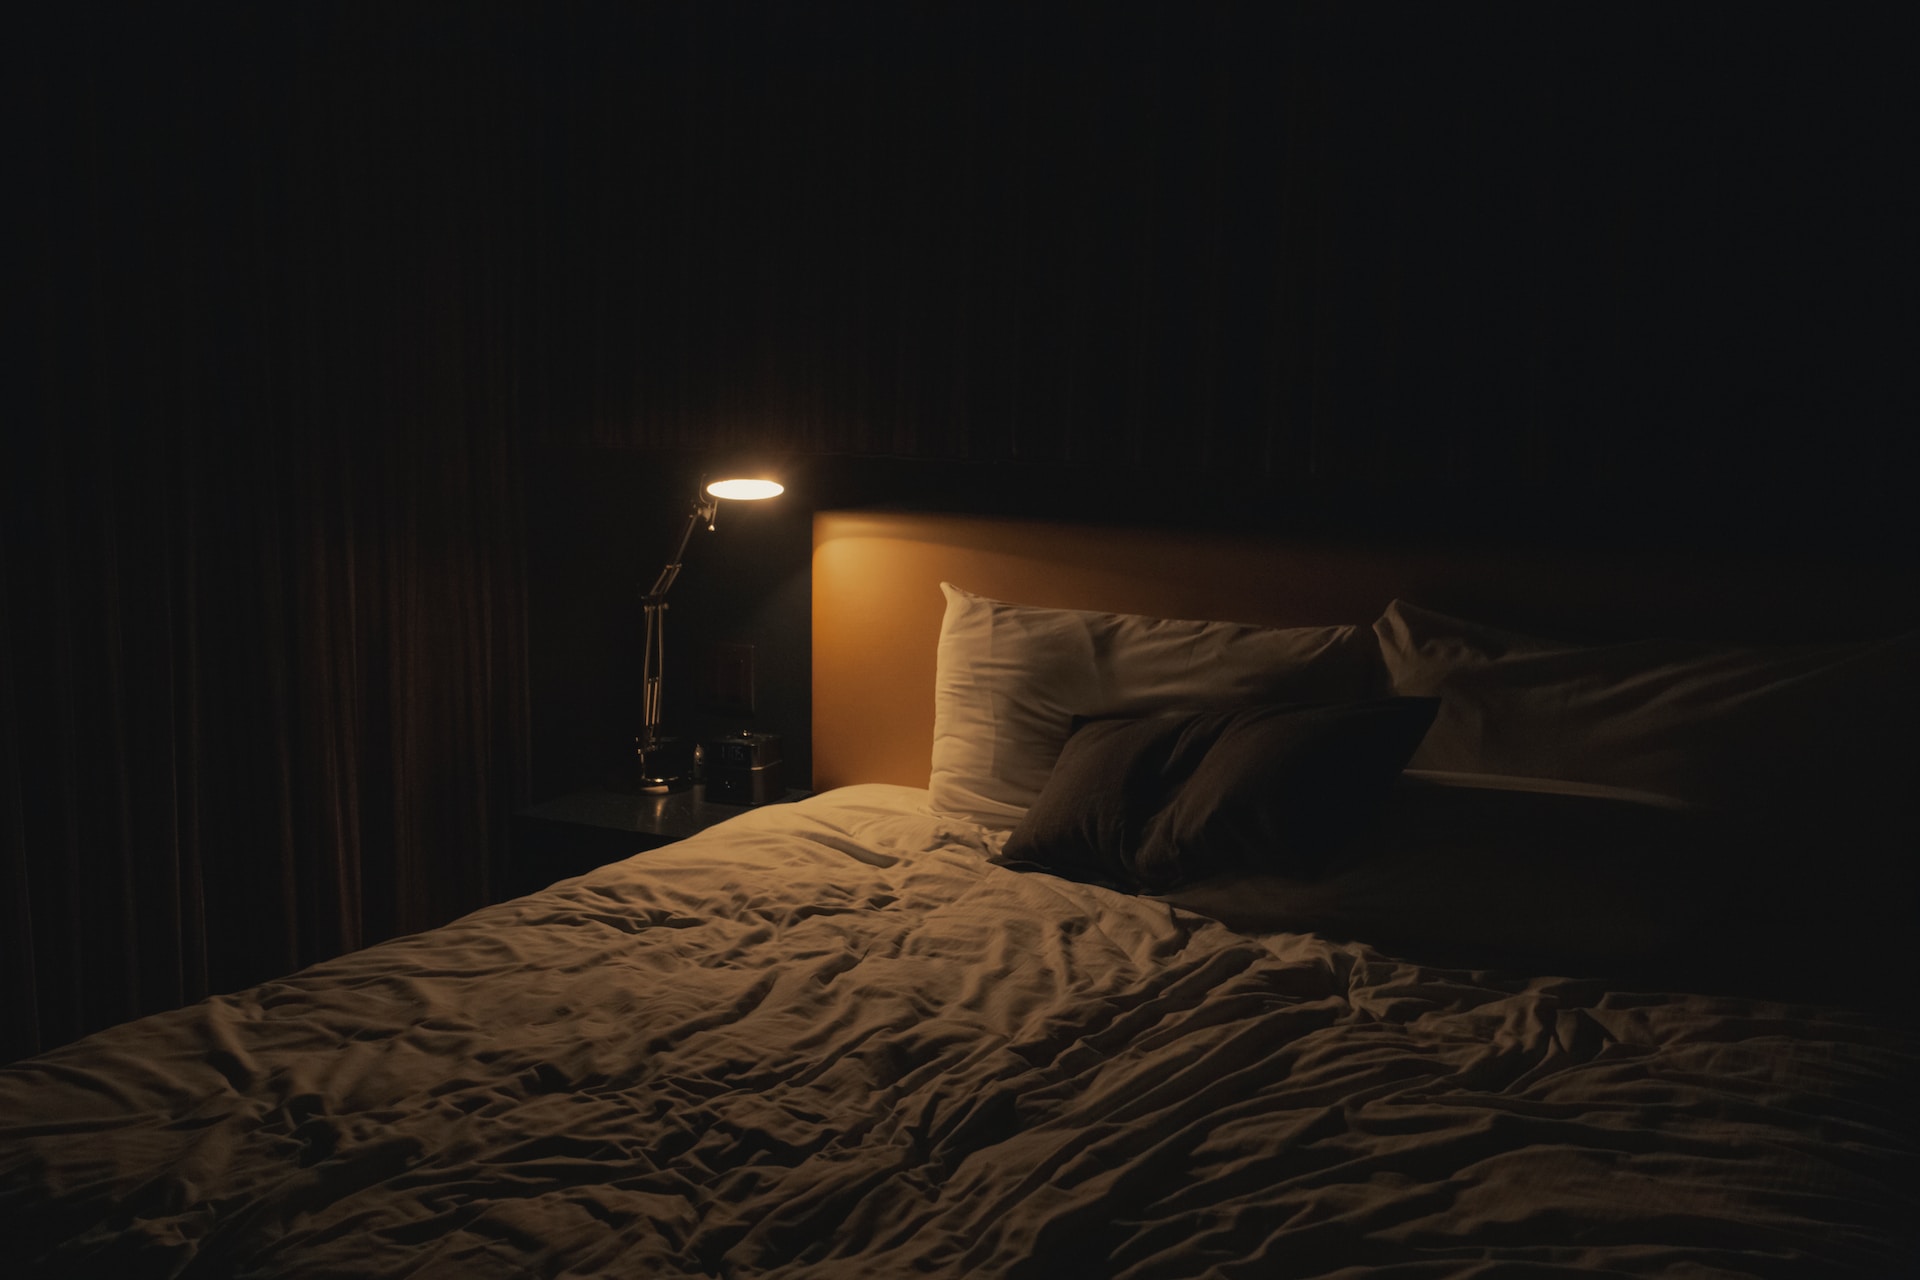 A dimly lit bedroom